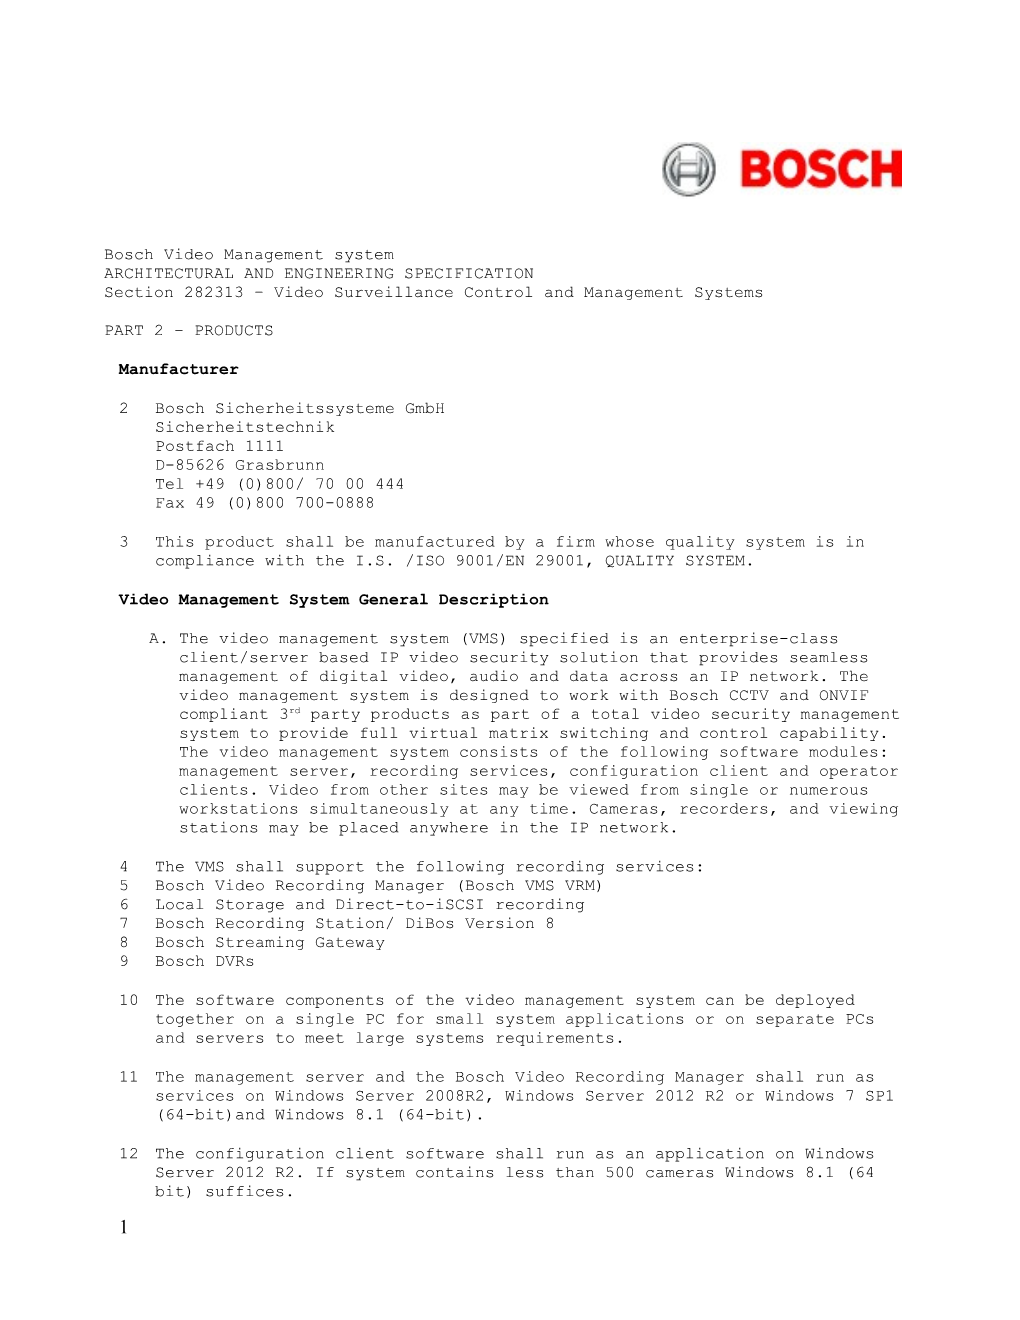 Bosch VMS A&E Specifications s1